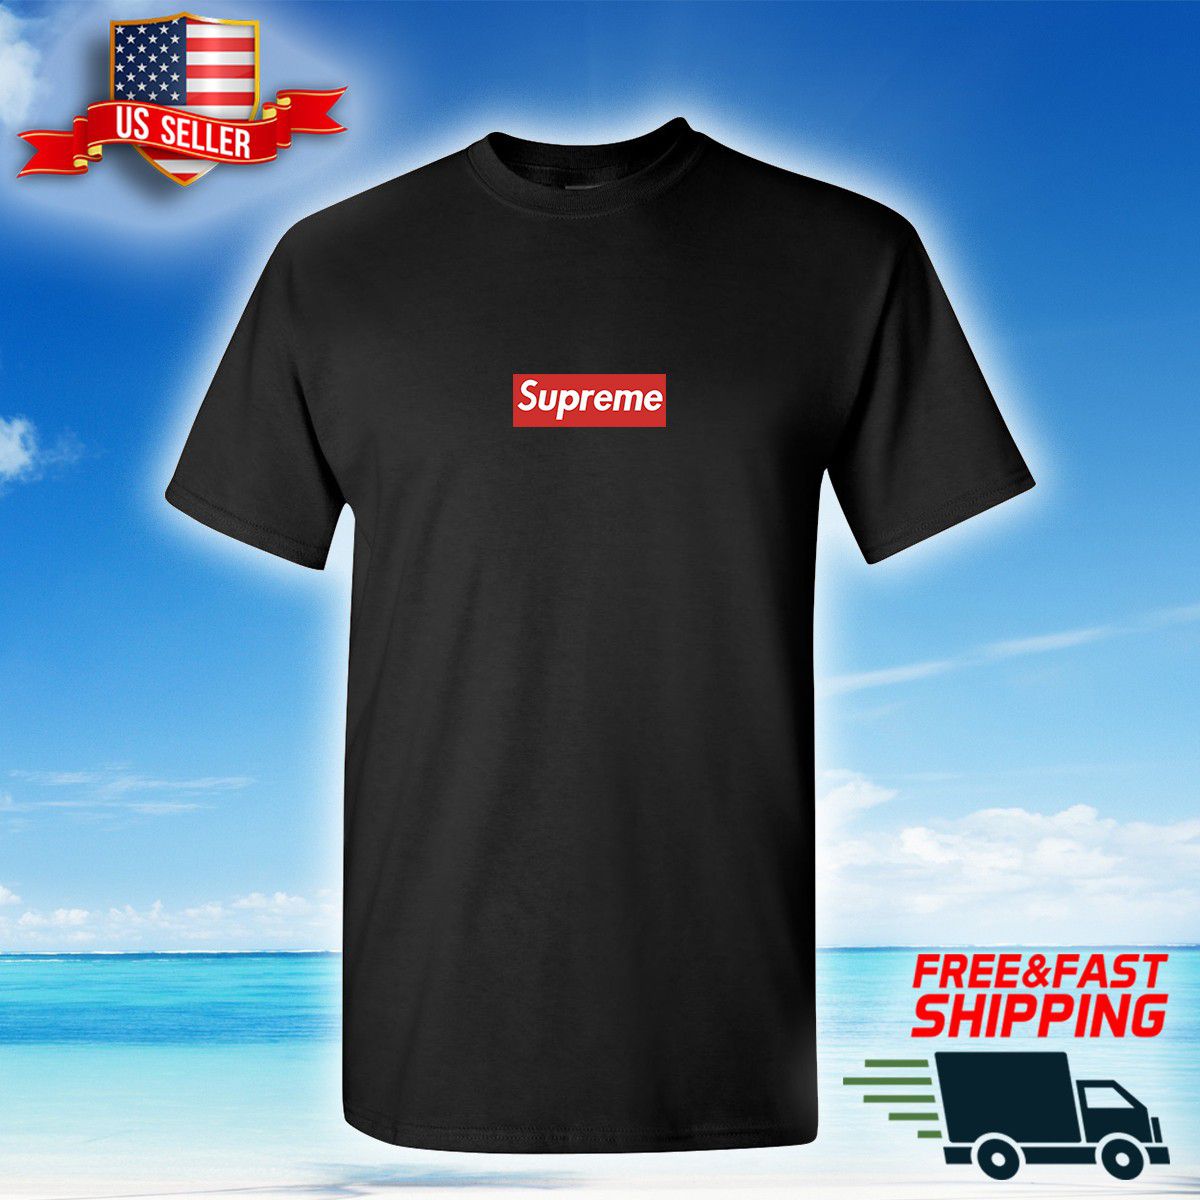 Supreme Box Logo Black T-Shirt - Custom made - SAME DAY SHIPPING